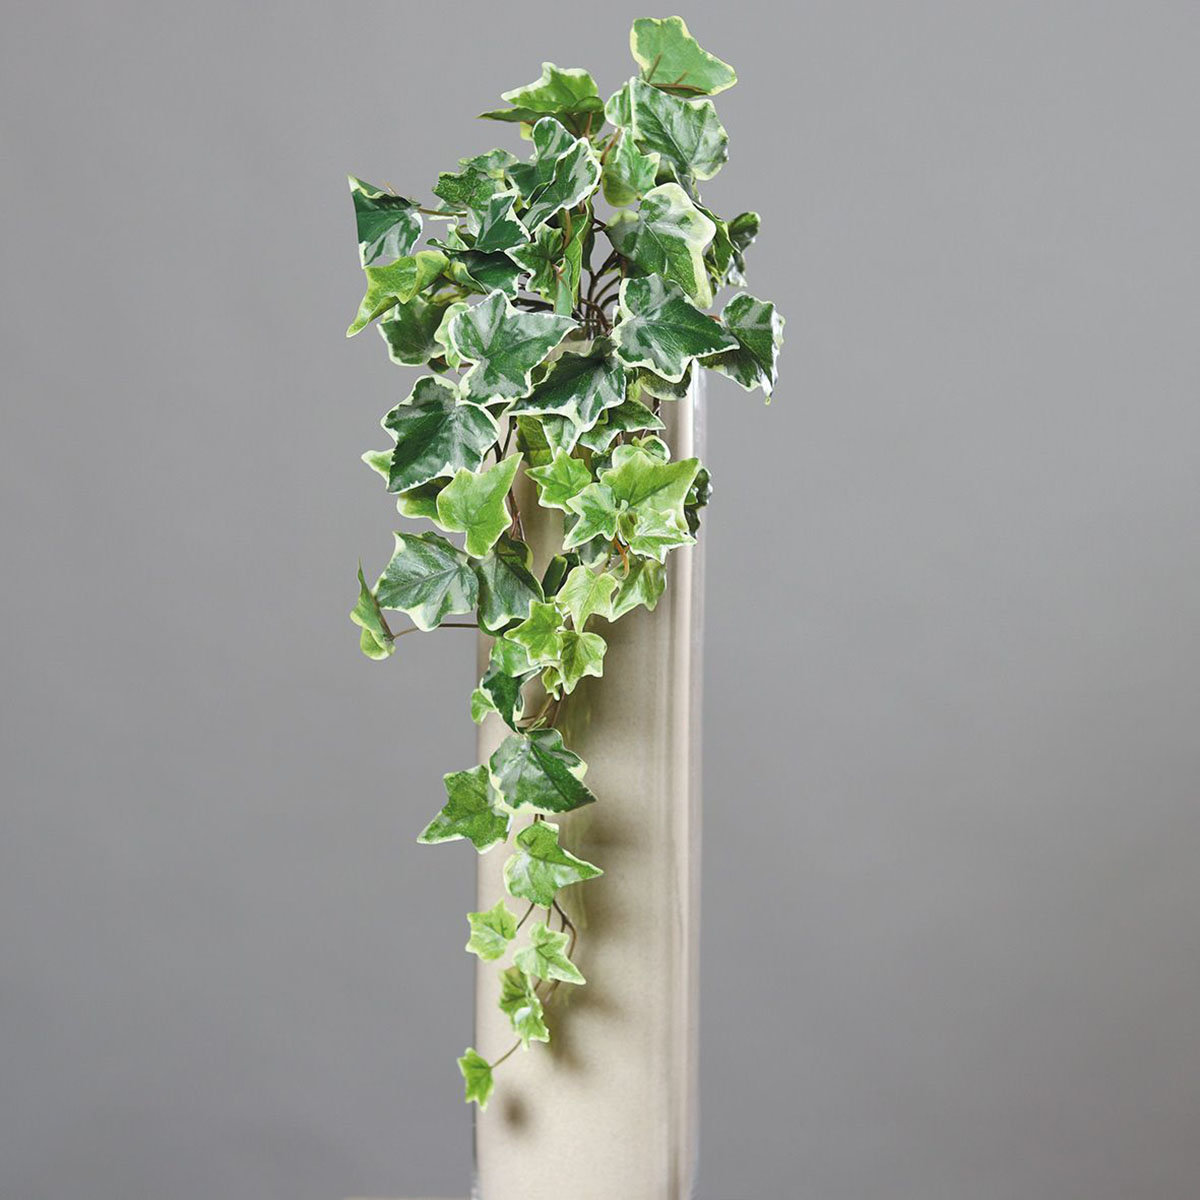 Kunstpflanze Efeuhänger, 45 cm, weiß-grün
| #6